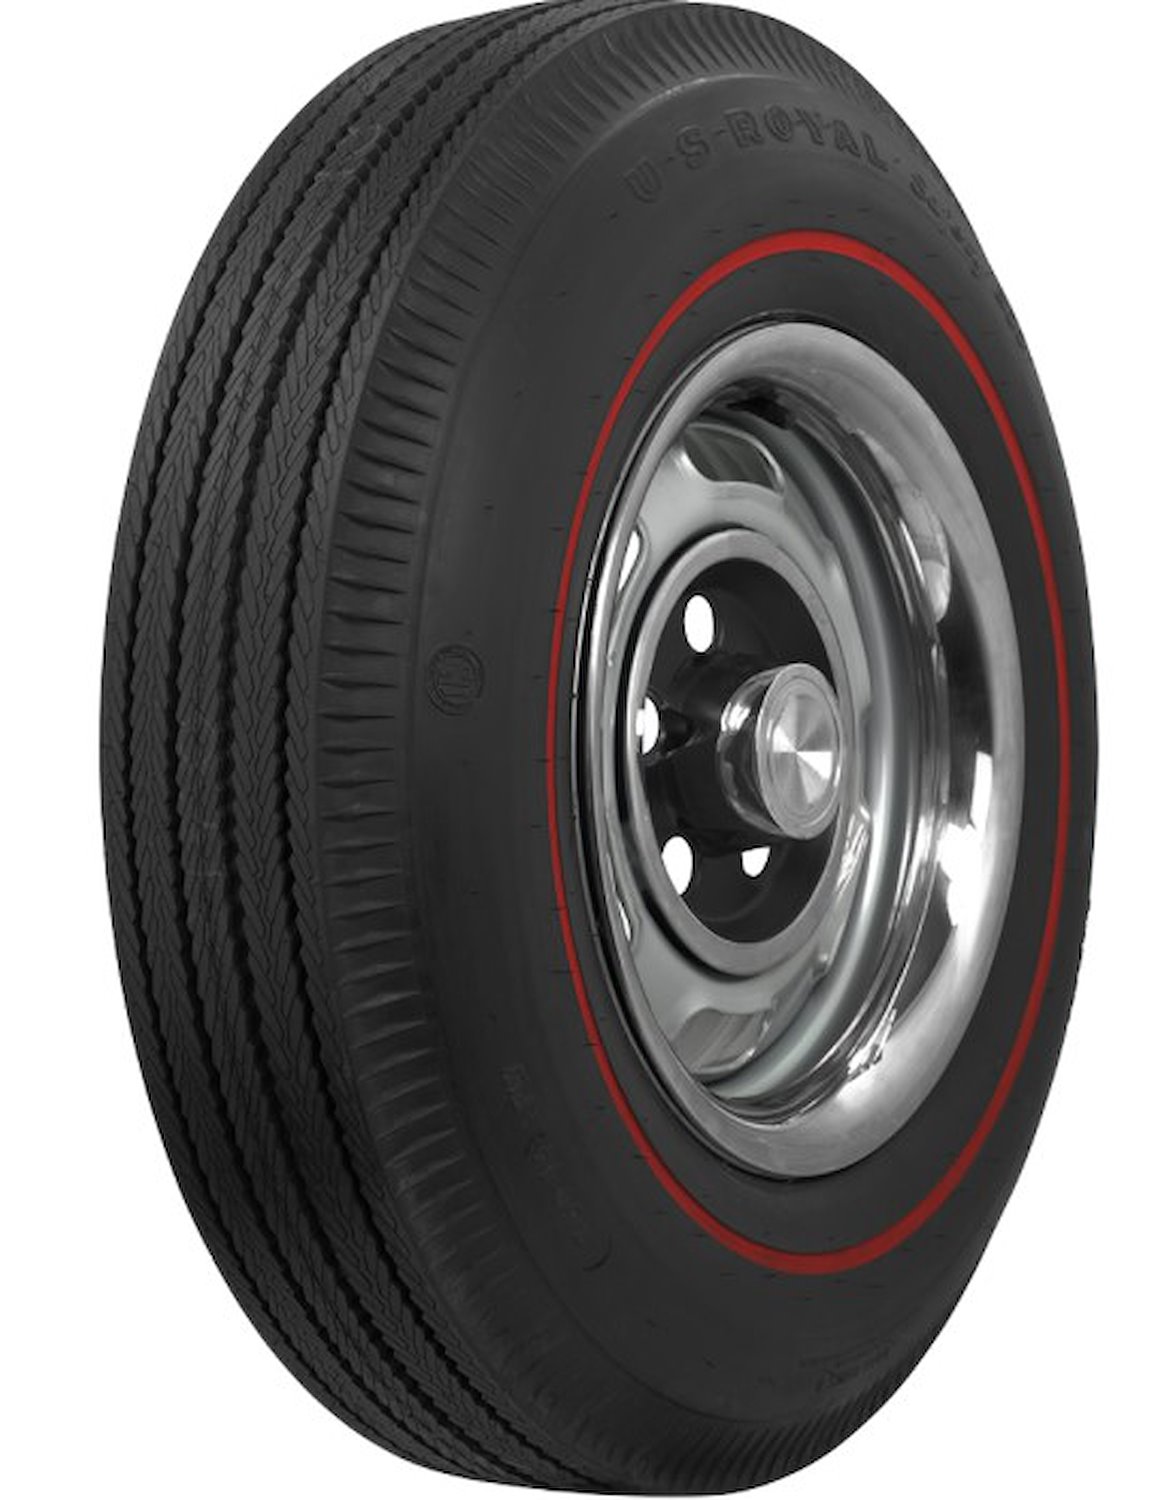 52380 Tire, US Royal Redline, 750-14